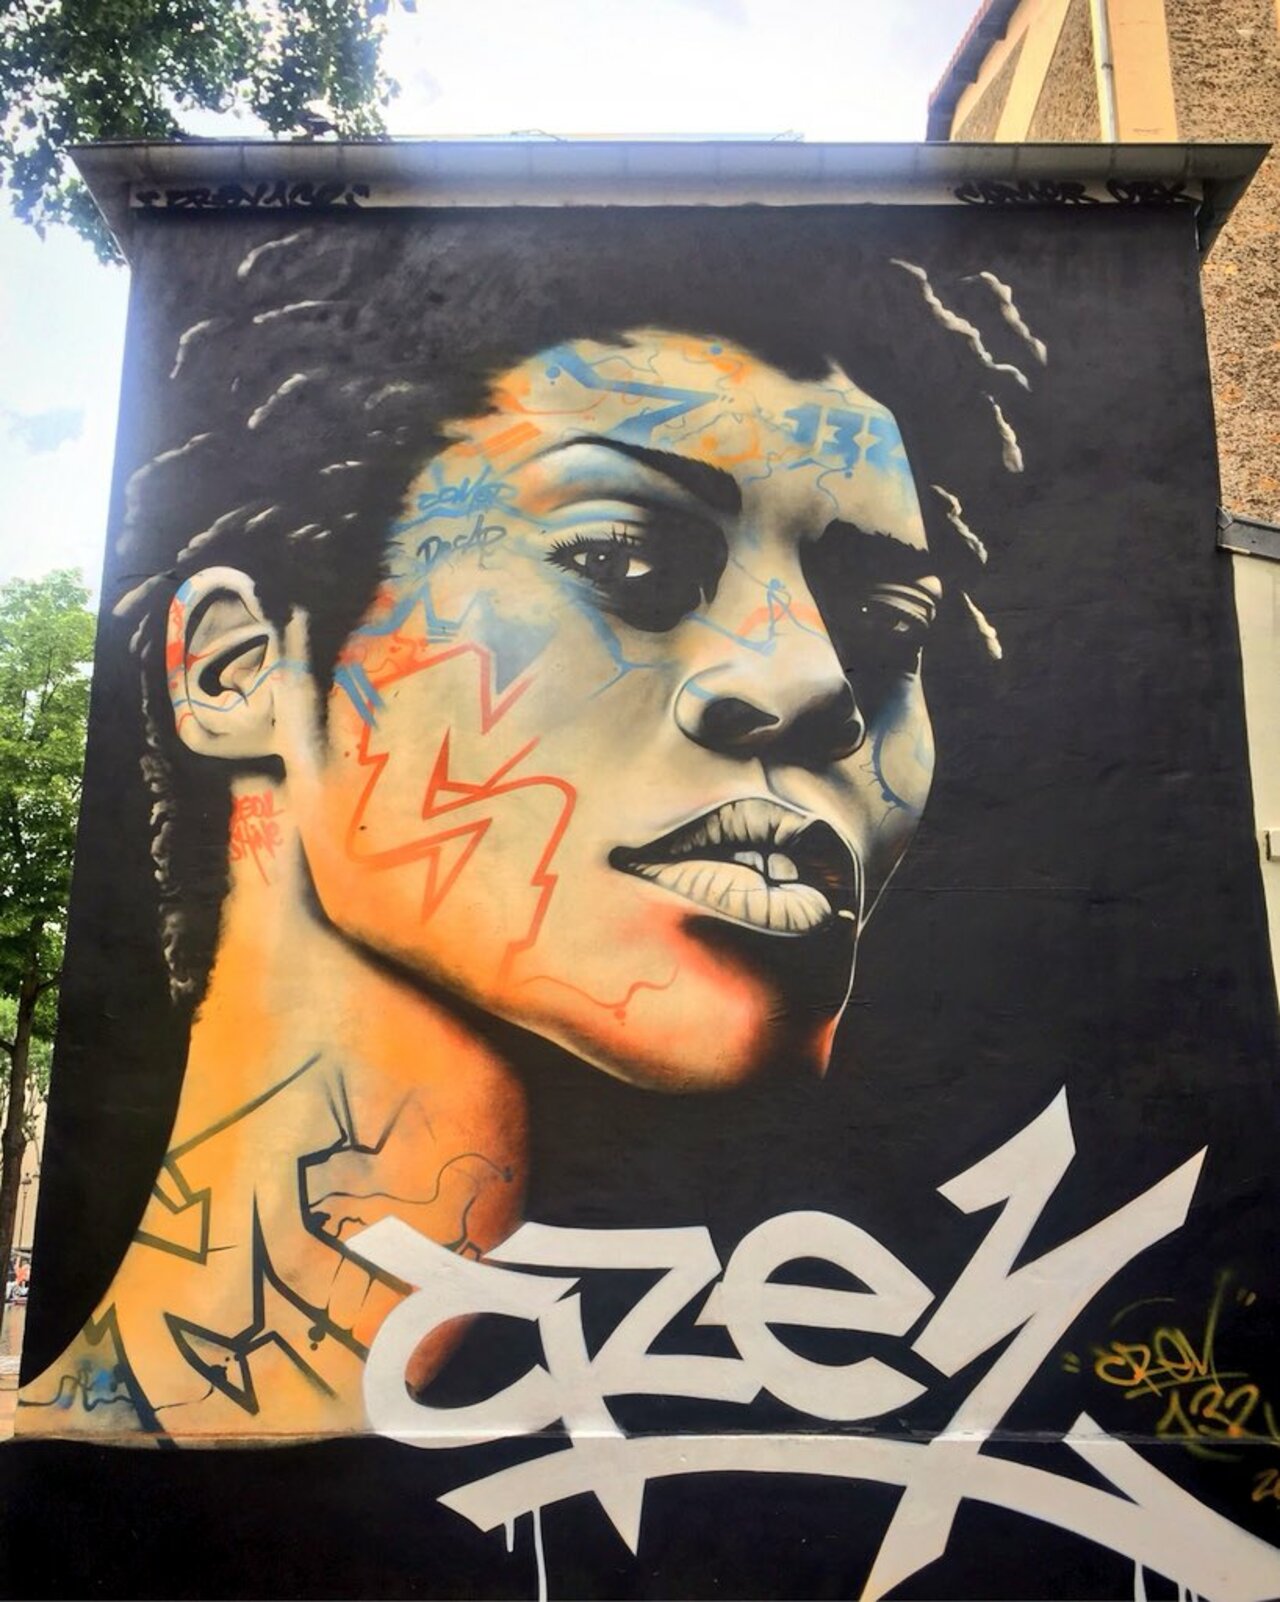 Face by #crey132 #132crew #creyoner #streetart #graffiti #spray #bombing #wall #urbanart #streetphoto #urbanwalls #graffart #nirindastreet https://t.co/W9vuQVDqHg